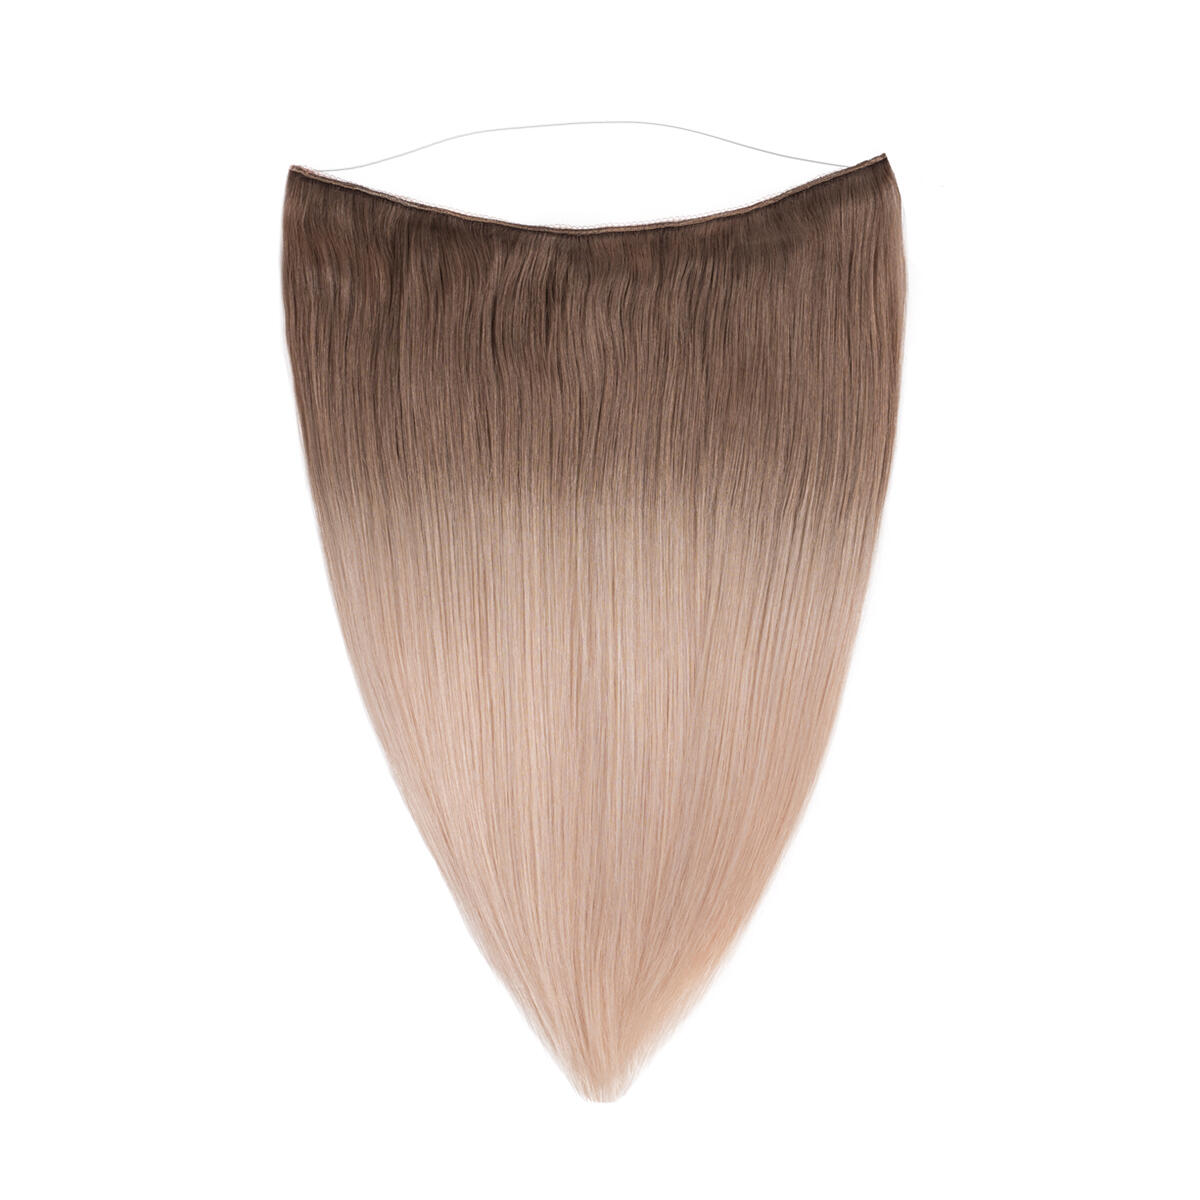 Hairband Original O7.3/10.8 Cendre Ash Blond Ombre 45 cm